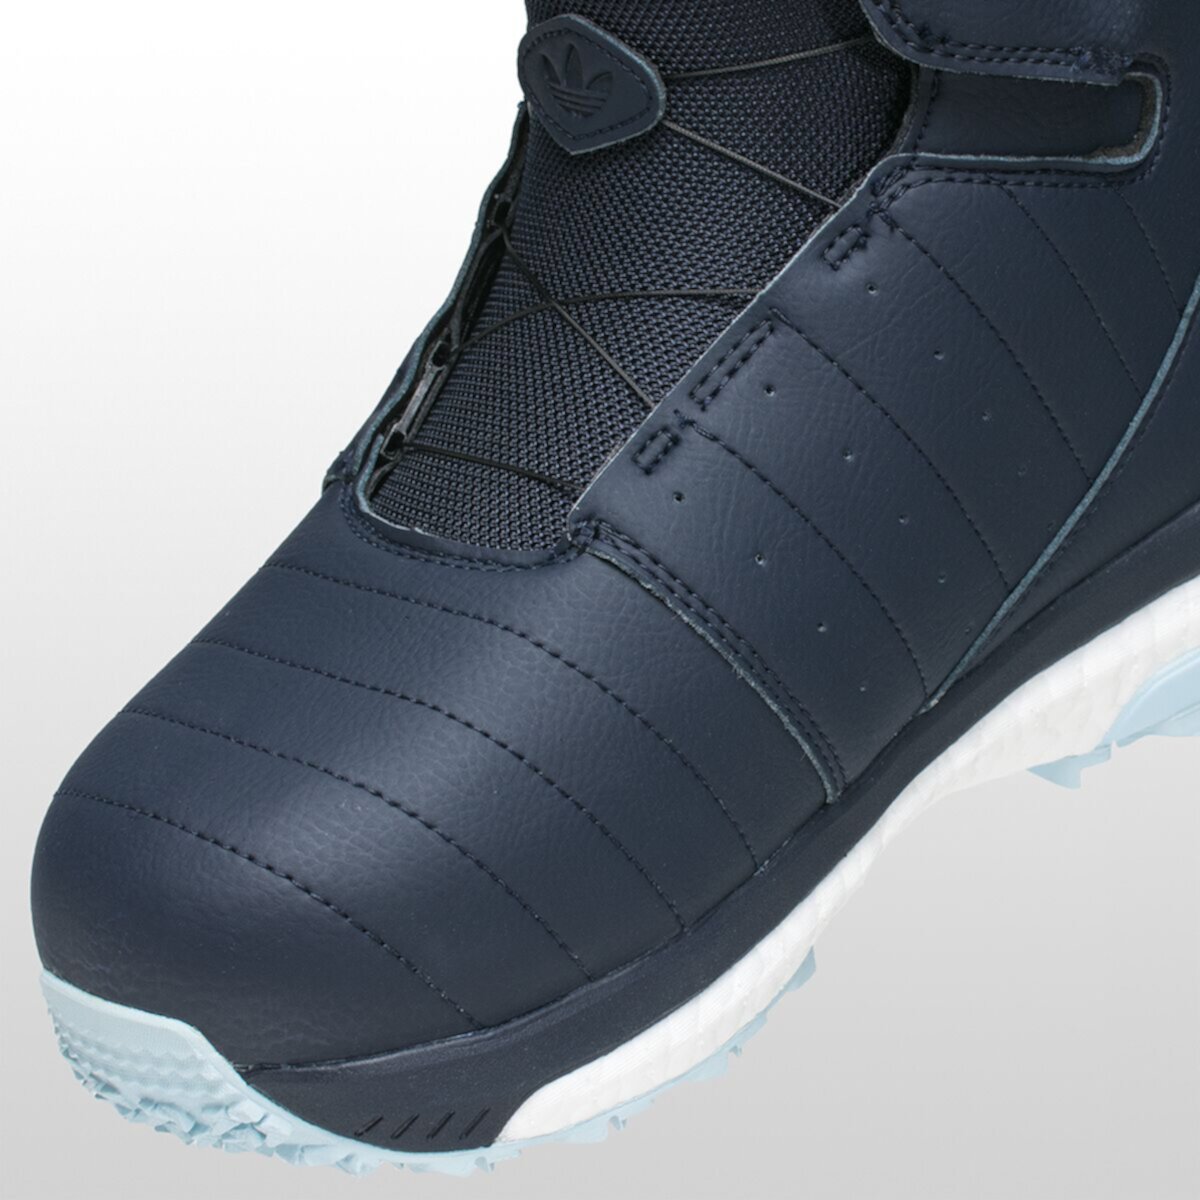 Ботинки для сноуборда Adidas Acerra 3ST ADV Adidas